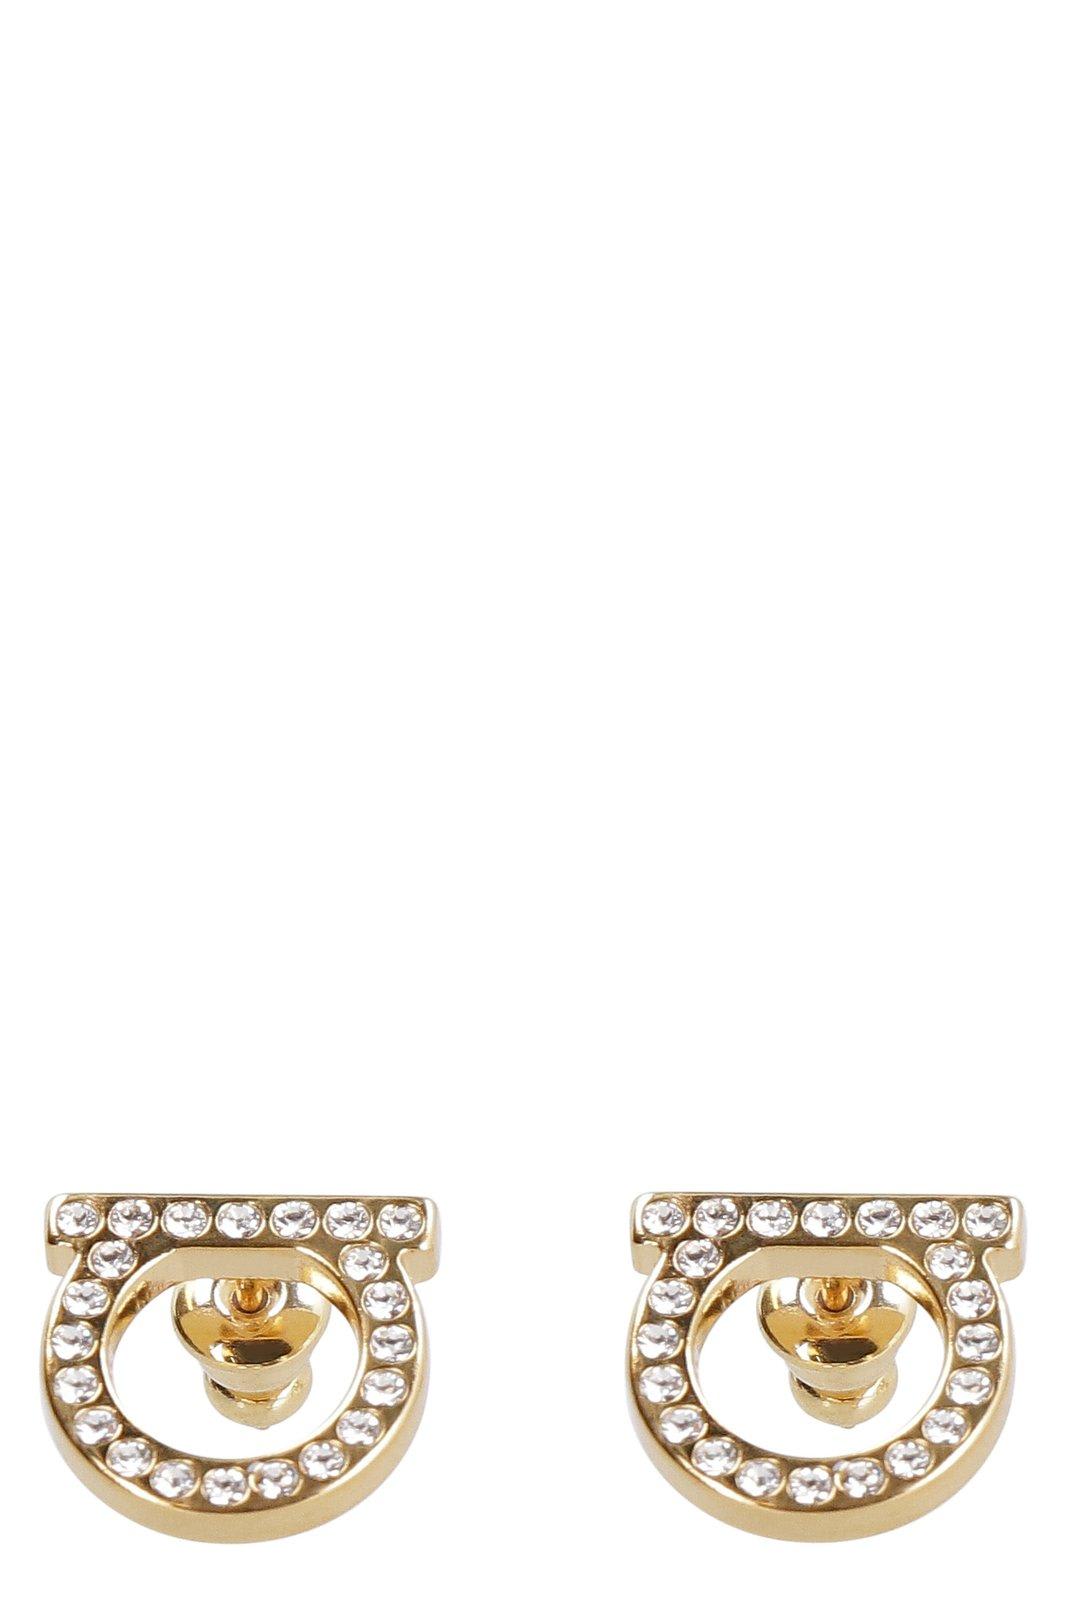 Salvatore Ferragamo Crystal Embellished Gancini Earrings